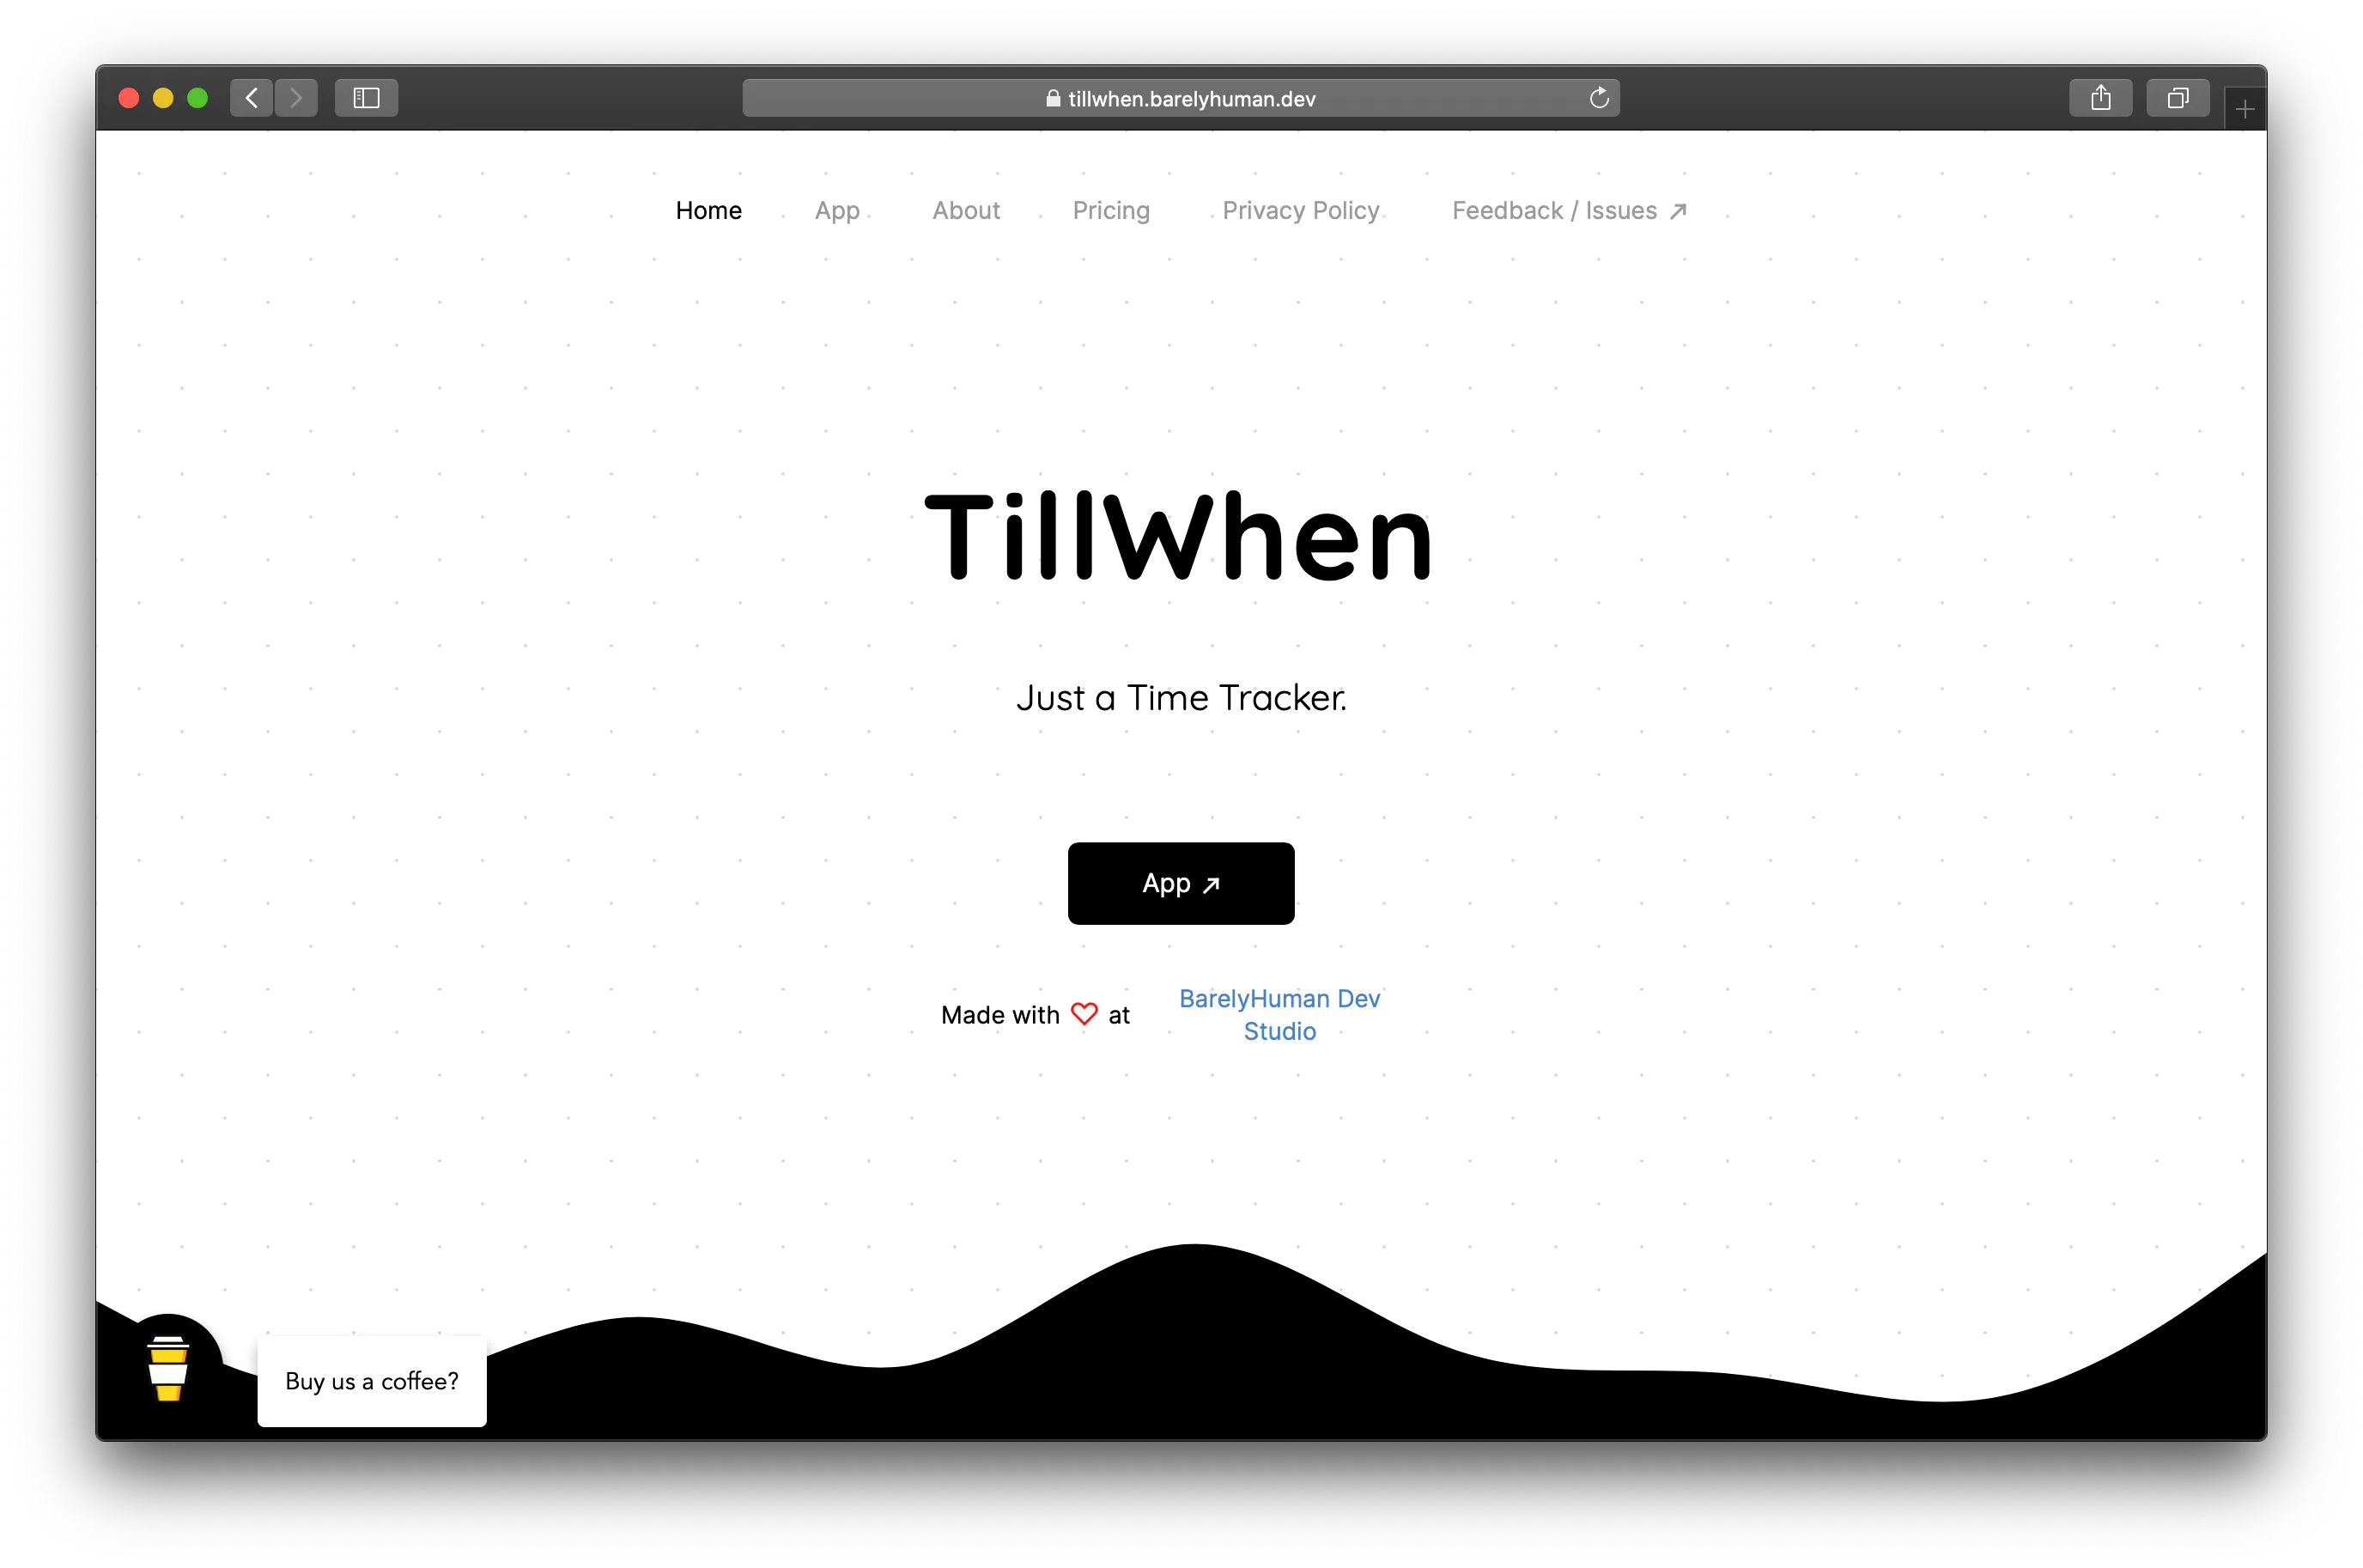 Find detailed information about TillWhen